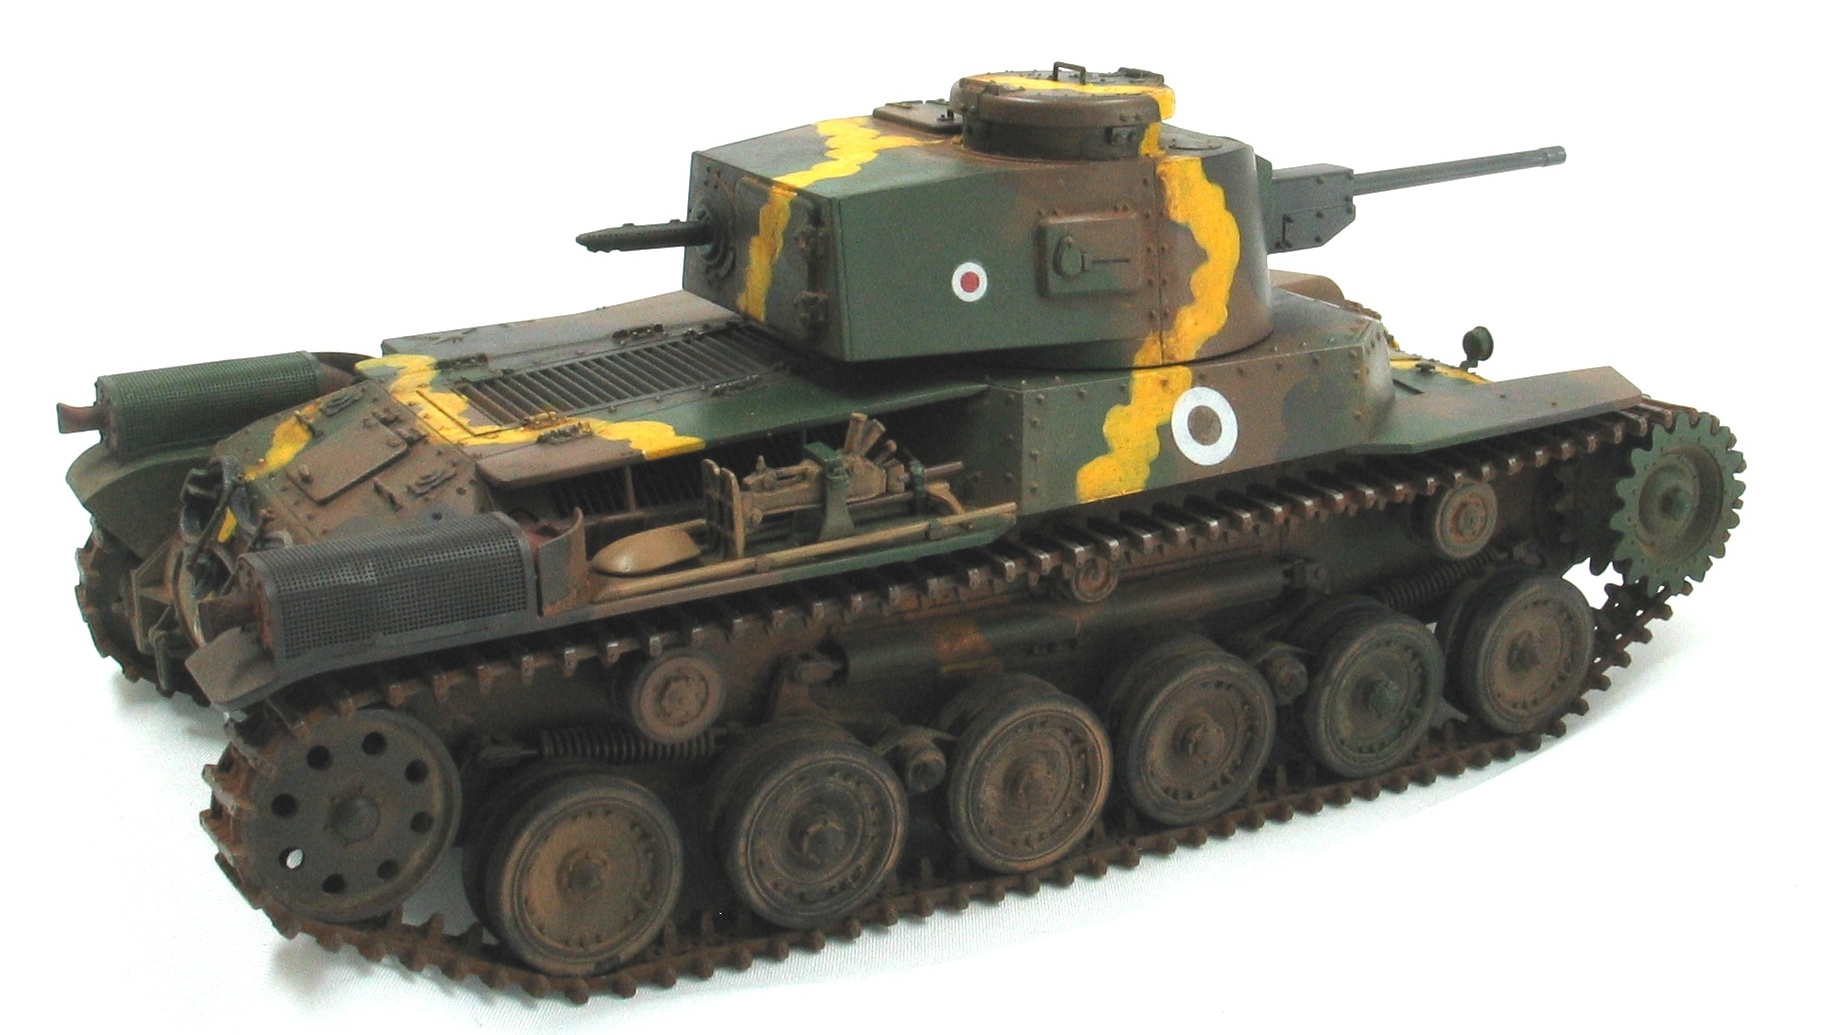 Type 97" shinhoto chi-ha "japonés medianas tanques Panzer kit 1/87 1/72